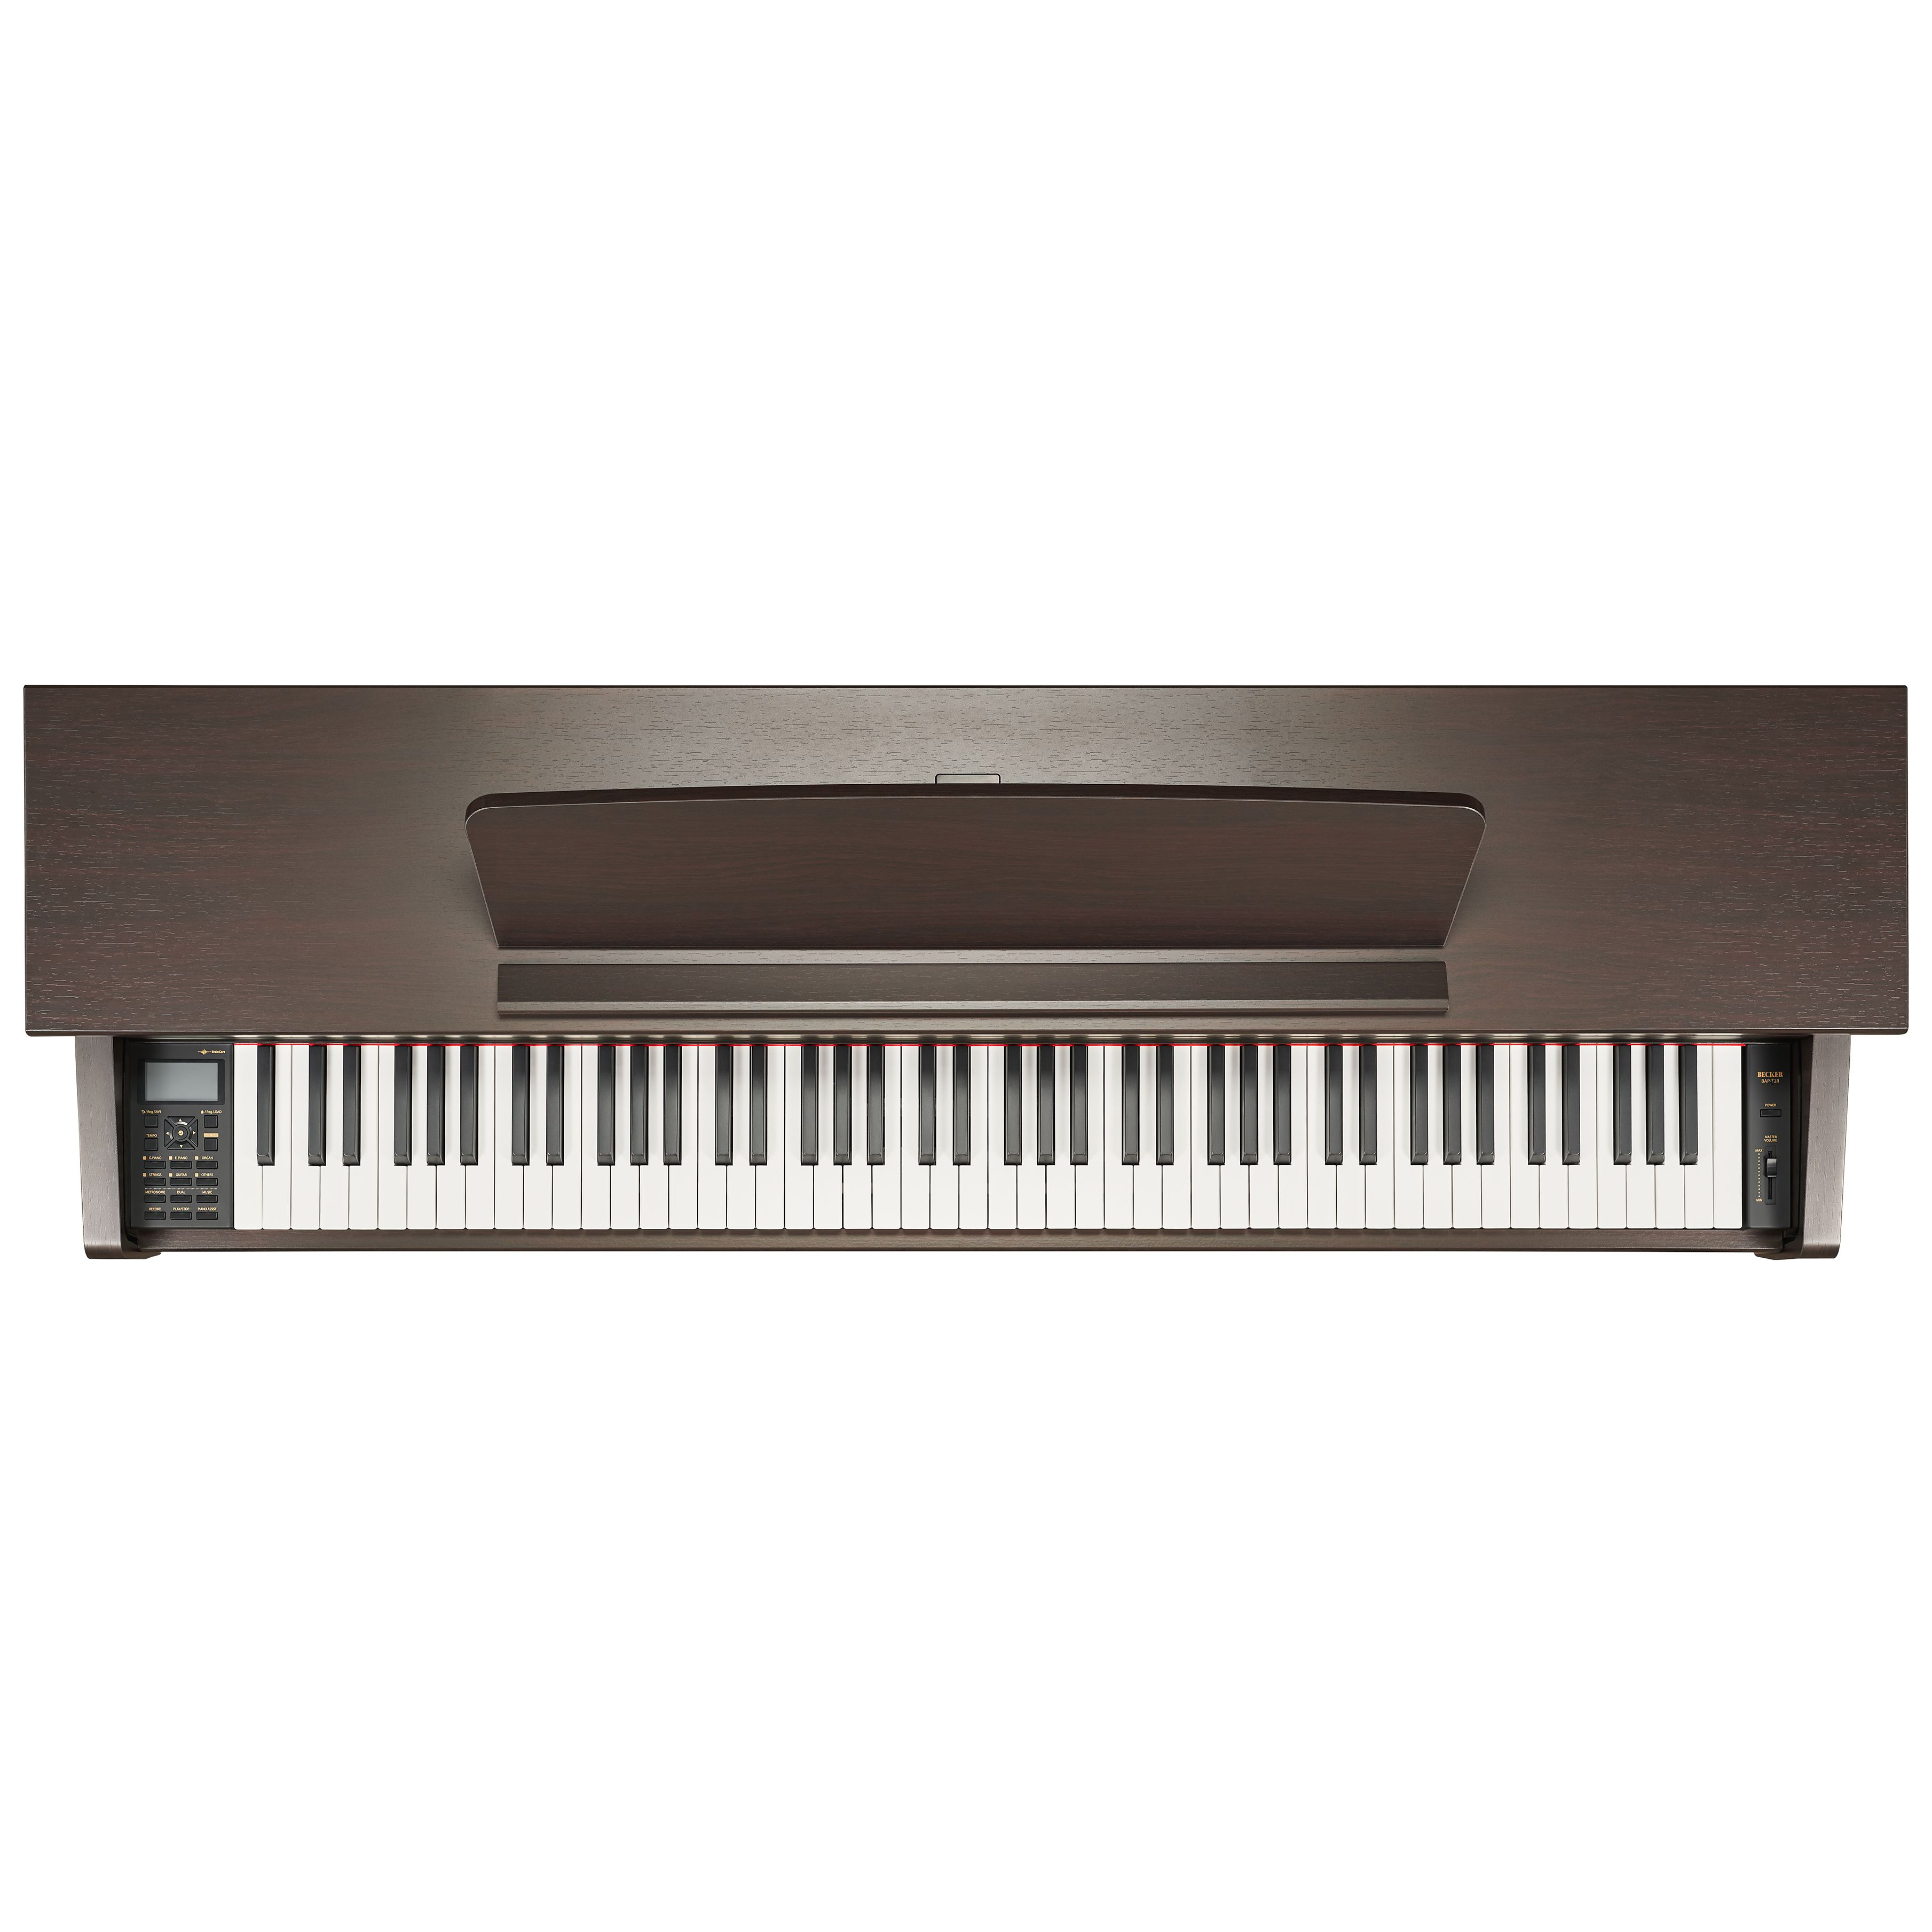 Becker BAP-72R Цифровые пианино